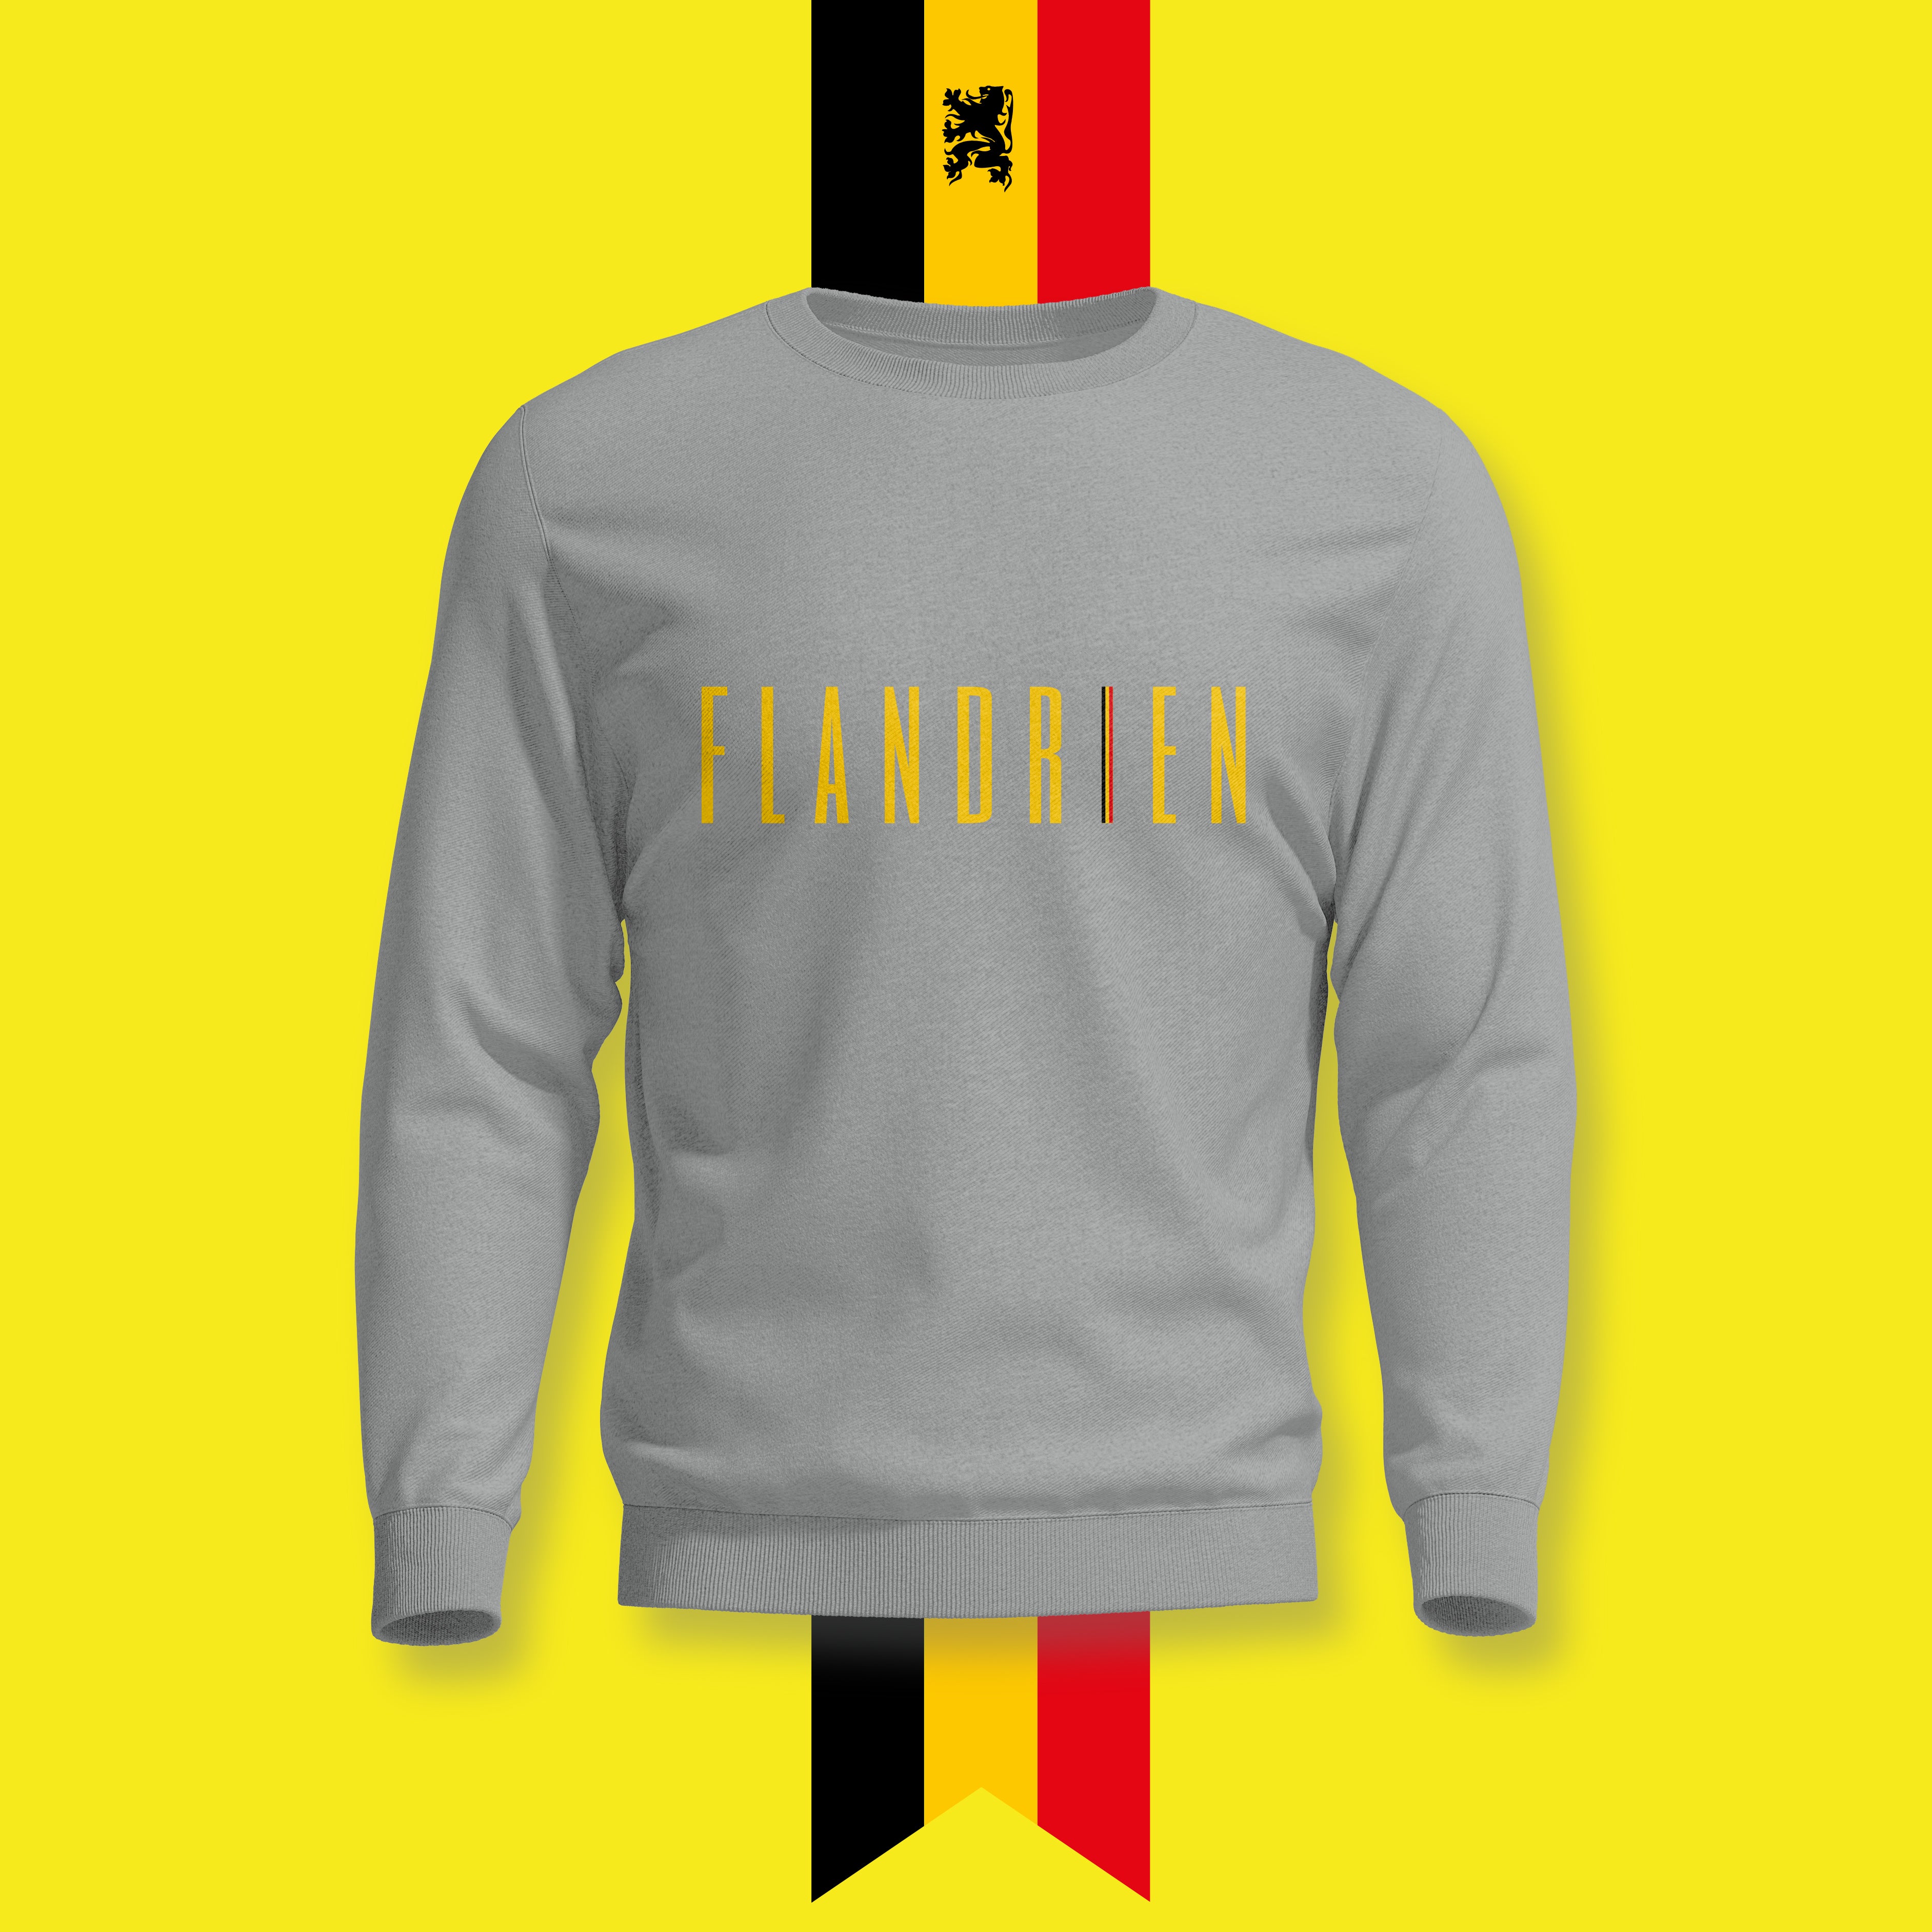 The Flandrien - Sweatshirt